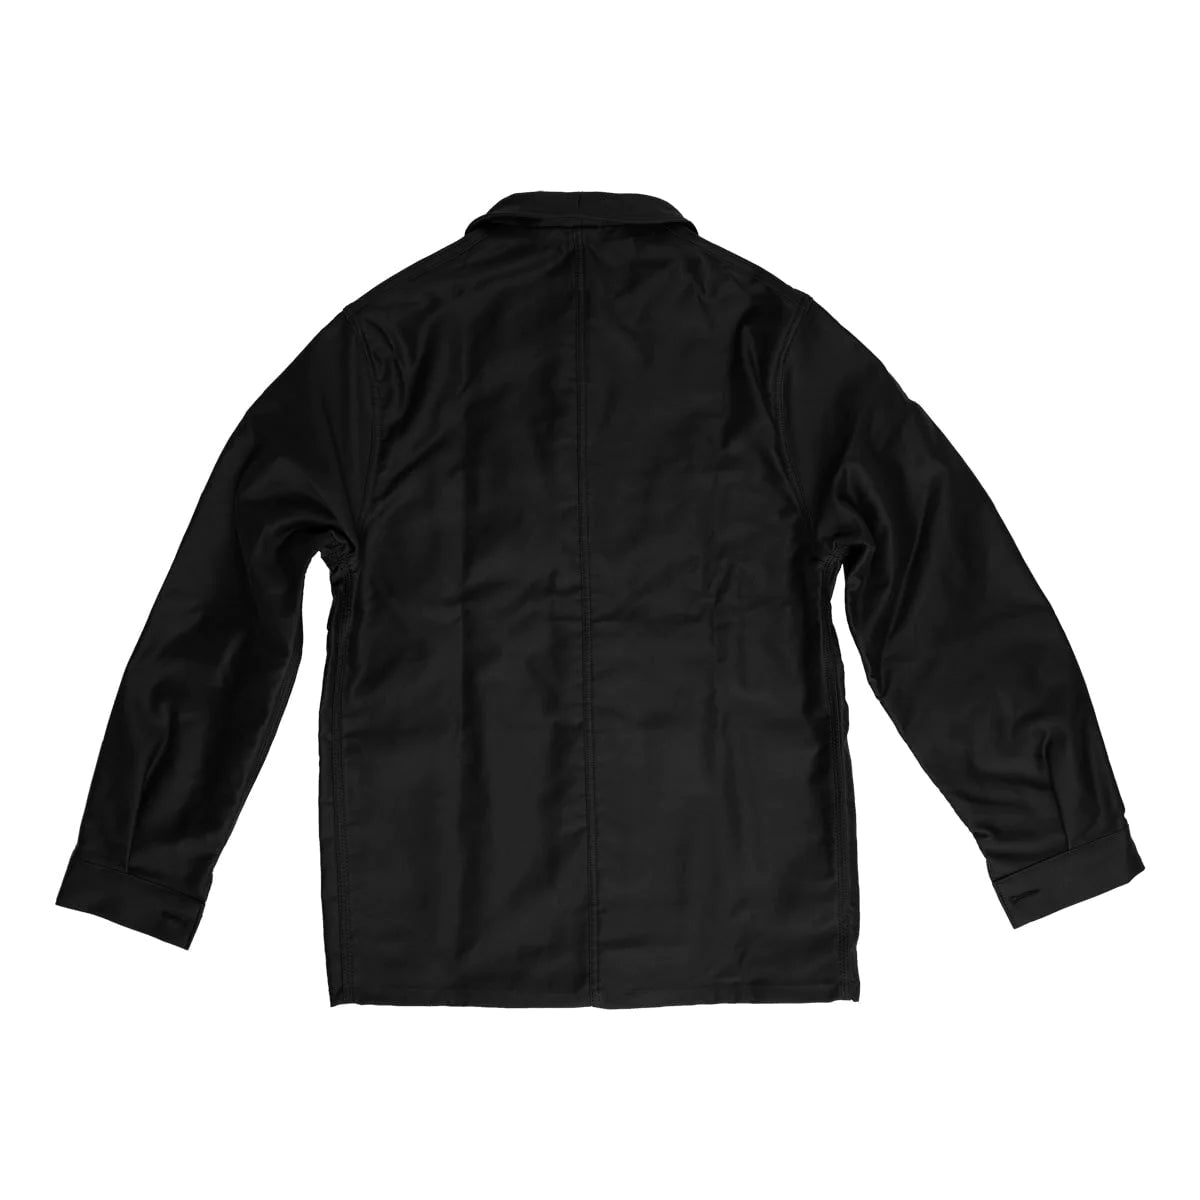 Le Laboureur French work jacket Moleskin ( Hydrone/ Black)